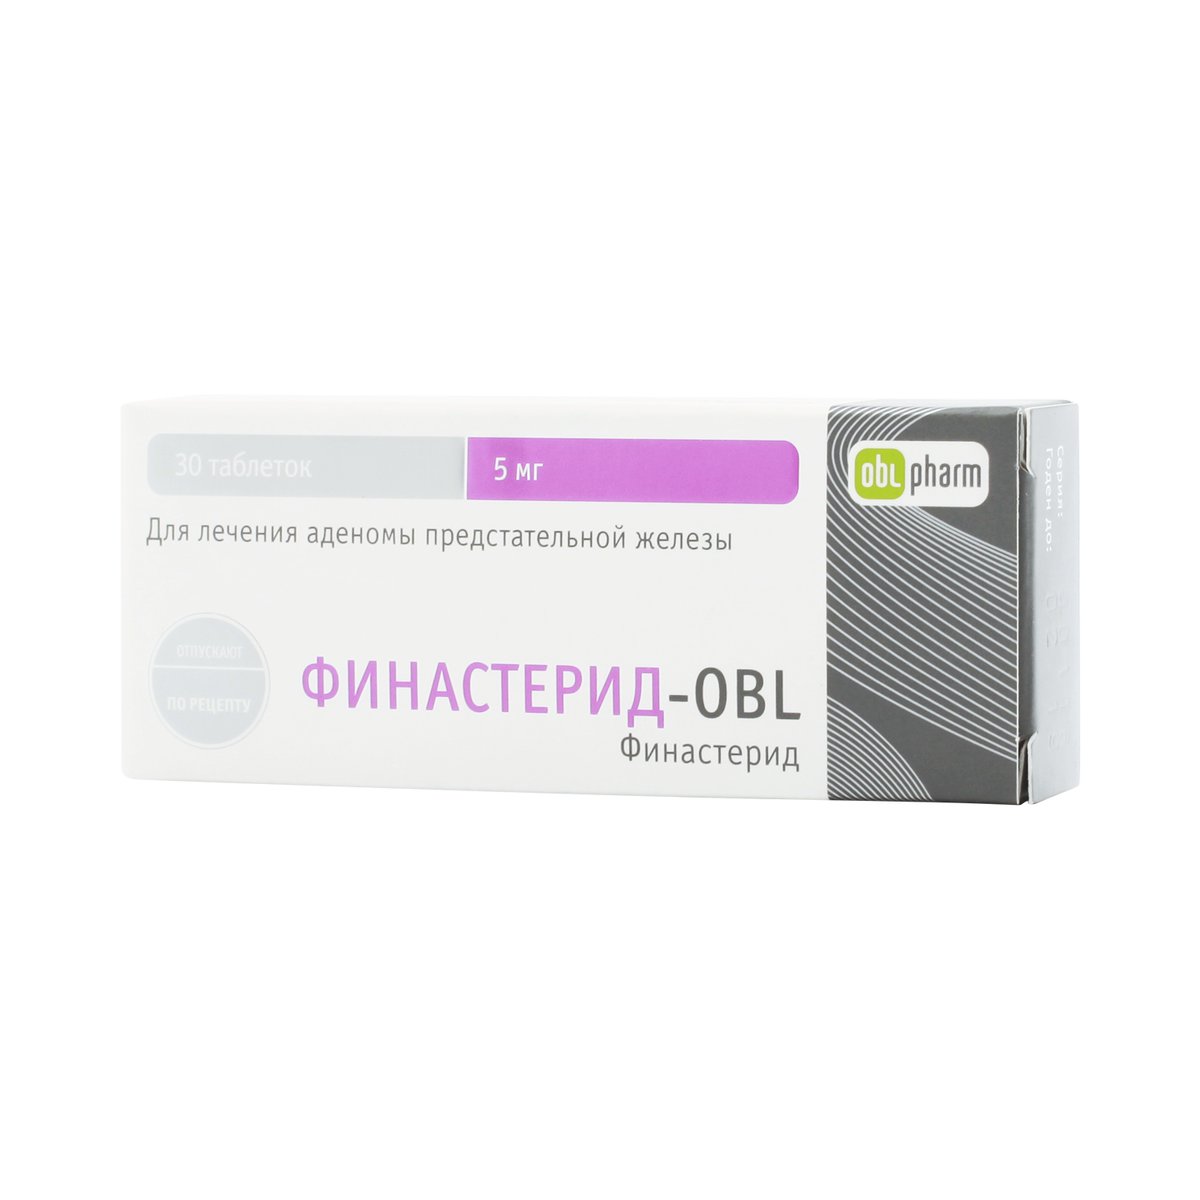 Финастерид-obl (таблетки, 30 шт, 5 мг) - цена,  онлайн  .